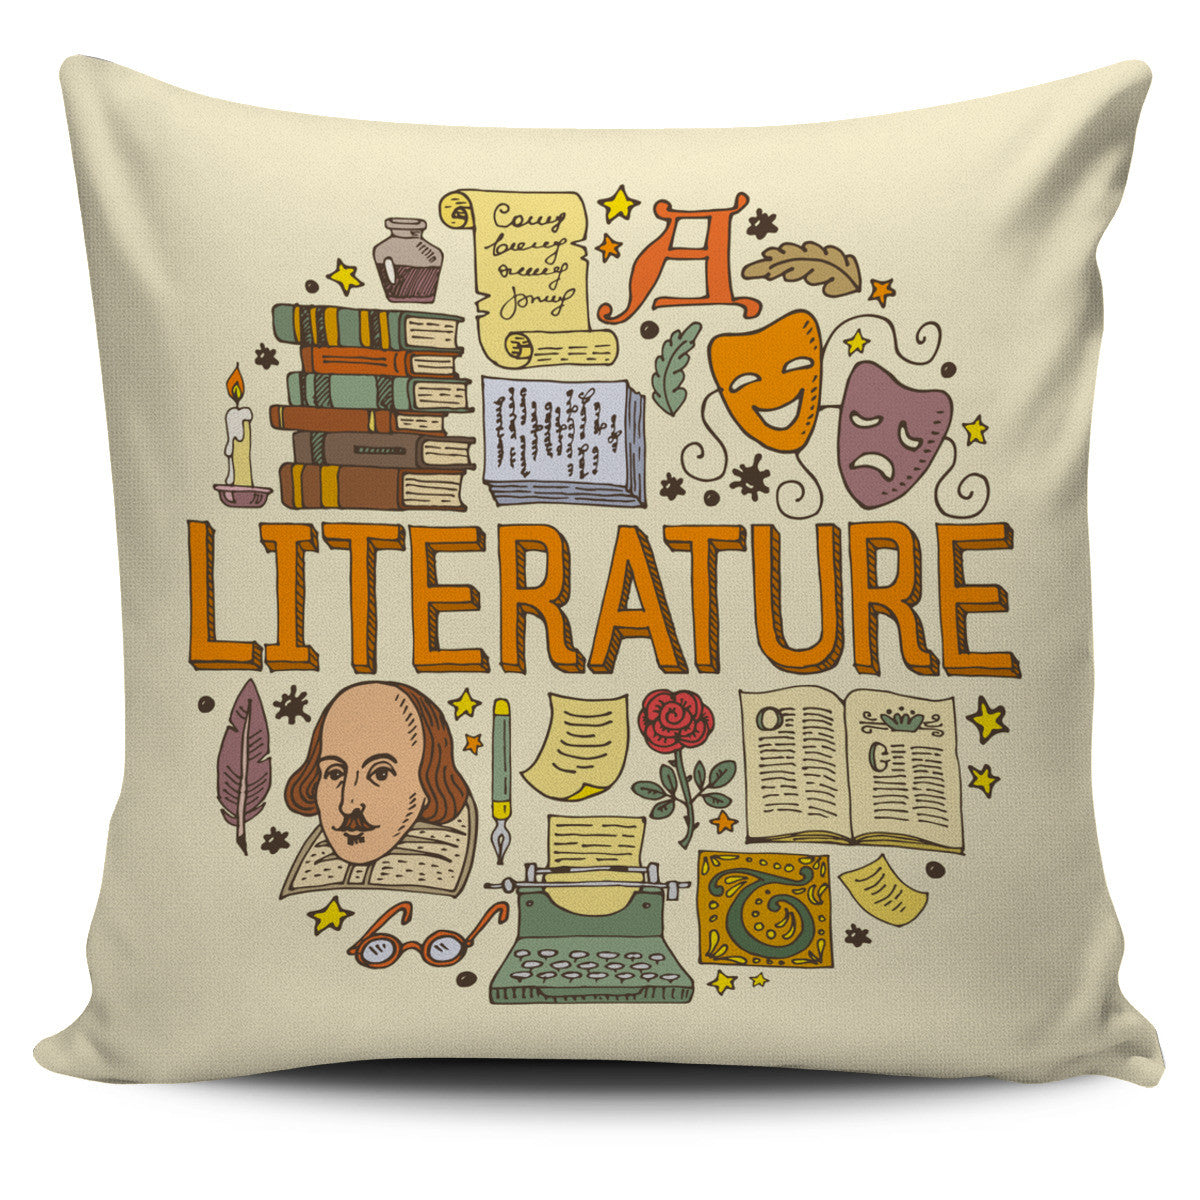 Literature Pillow Cover